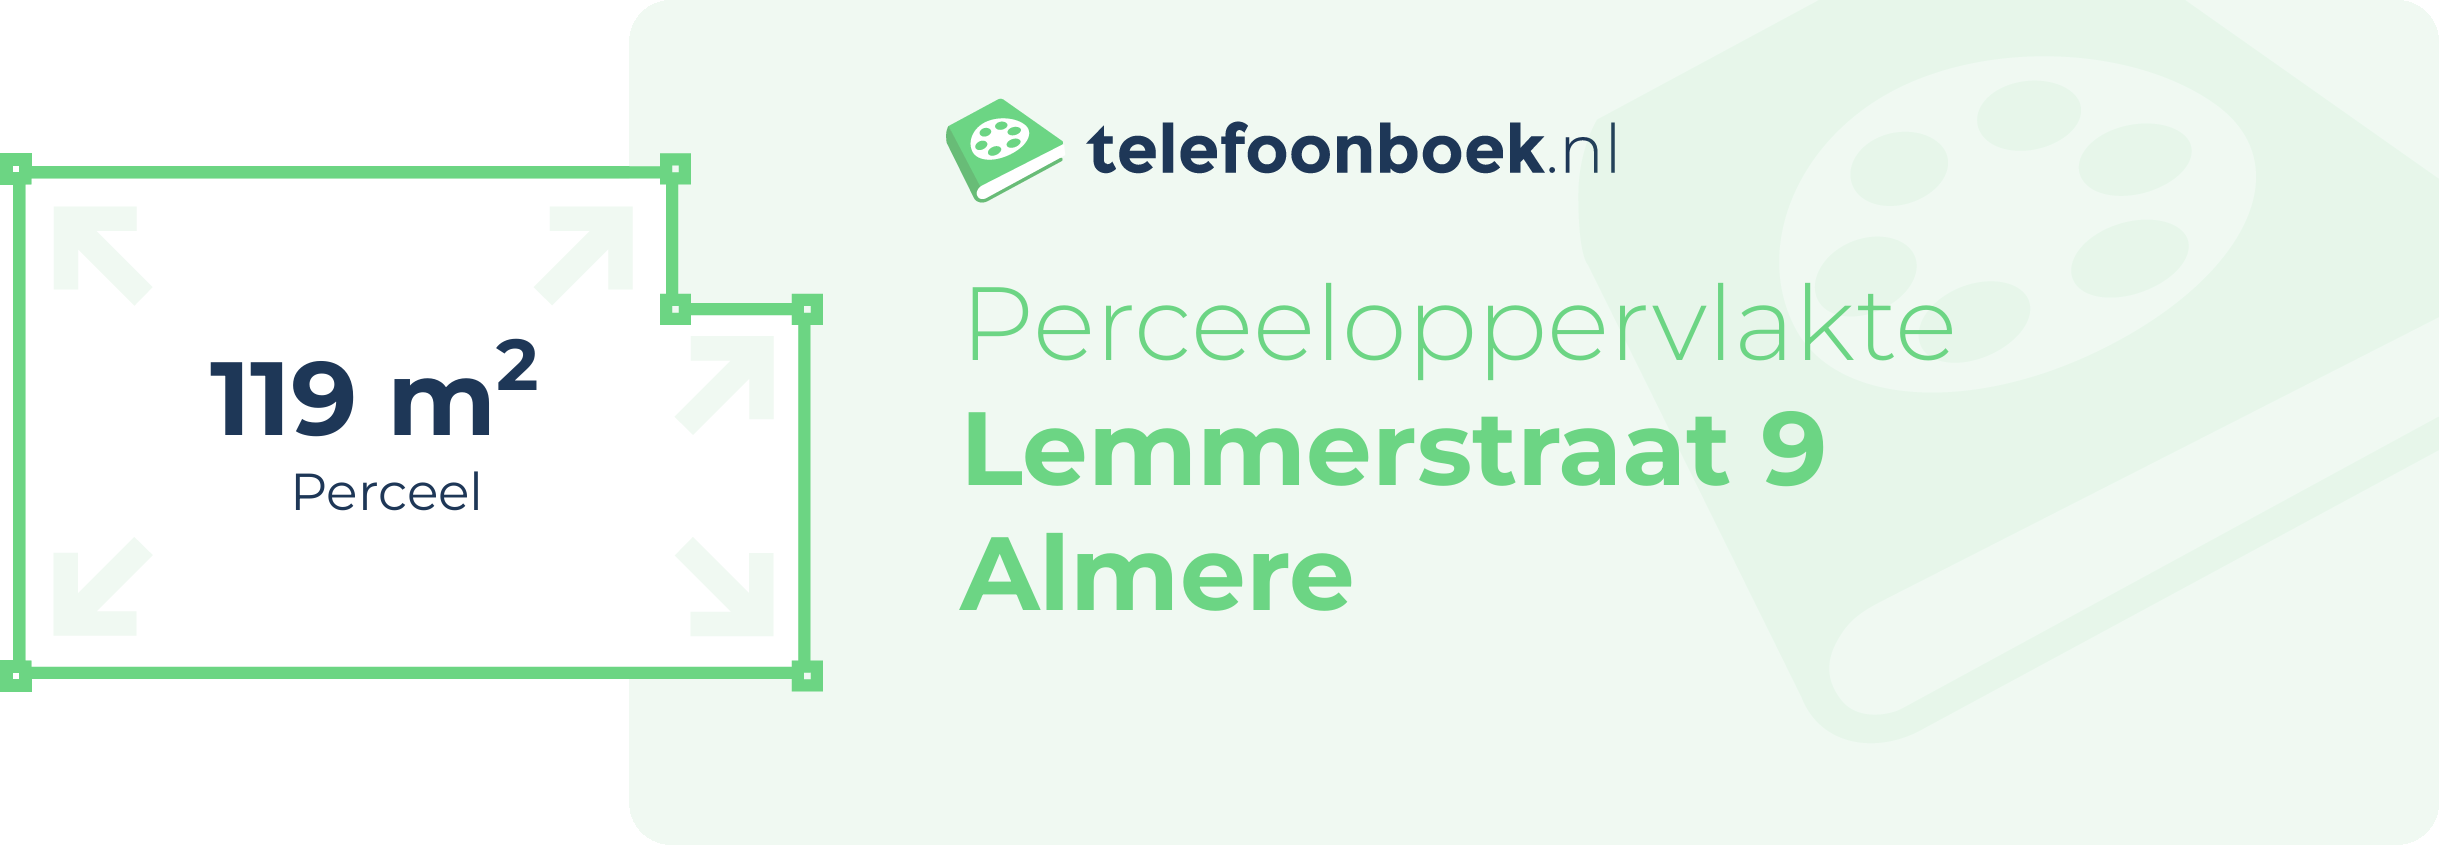 Perceeloppervlakte Lemmerstraat 9 Almere